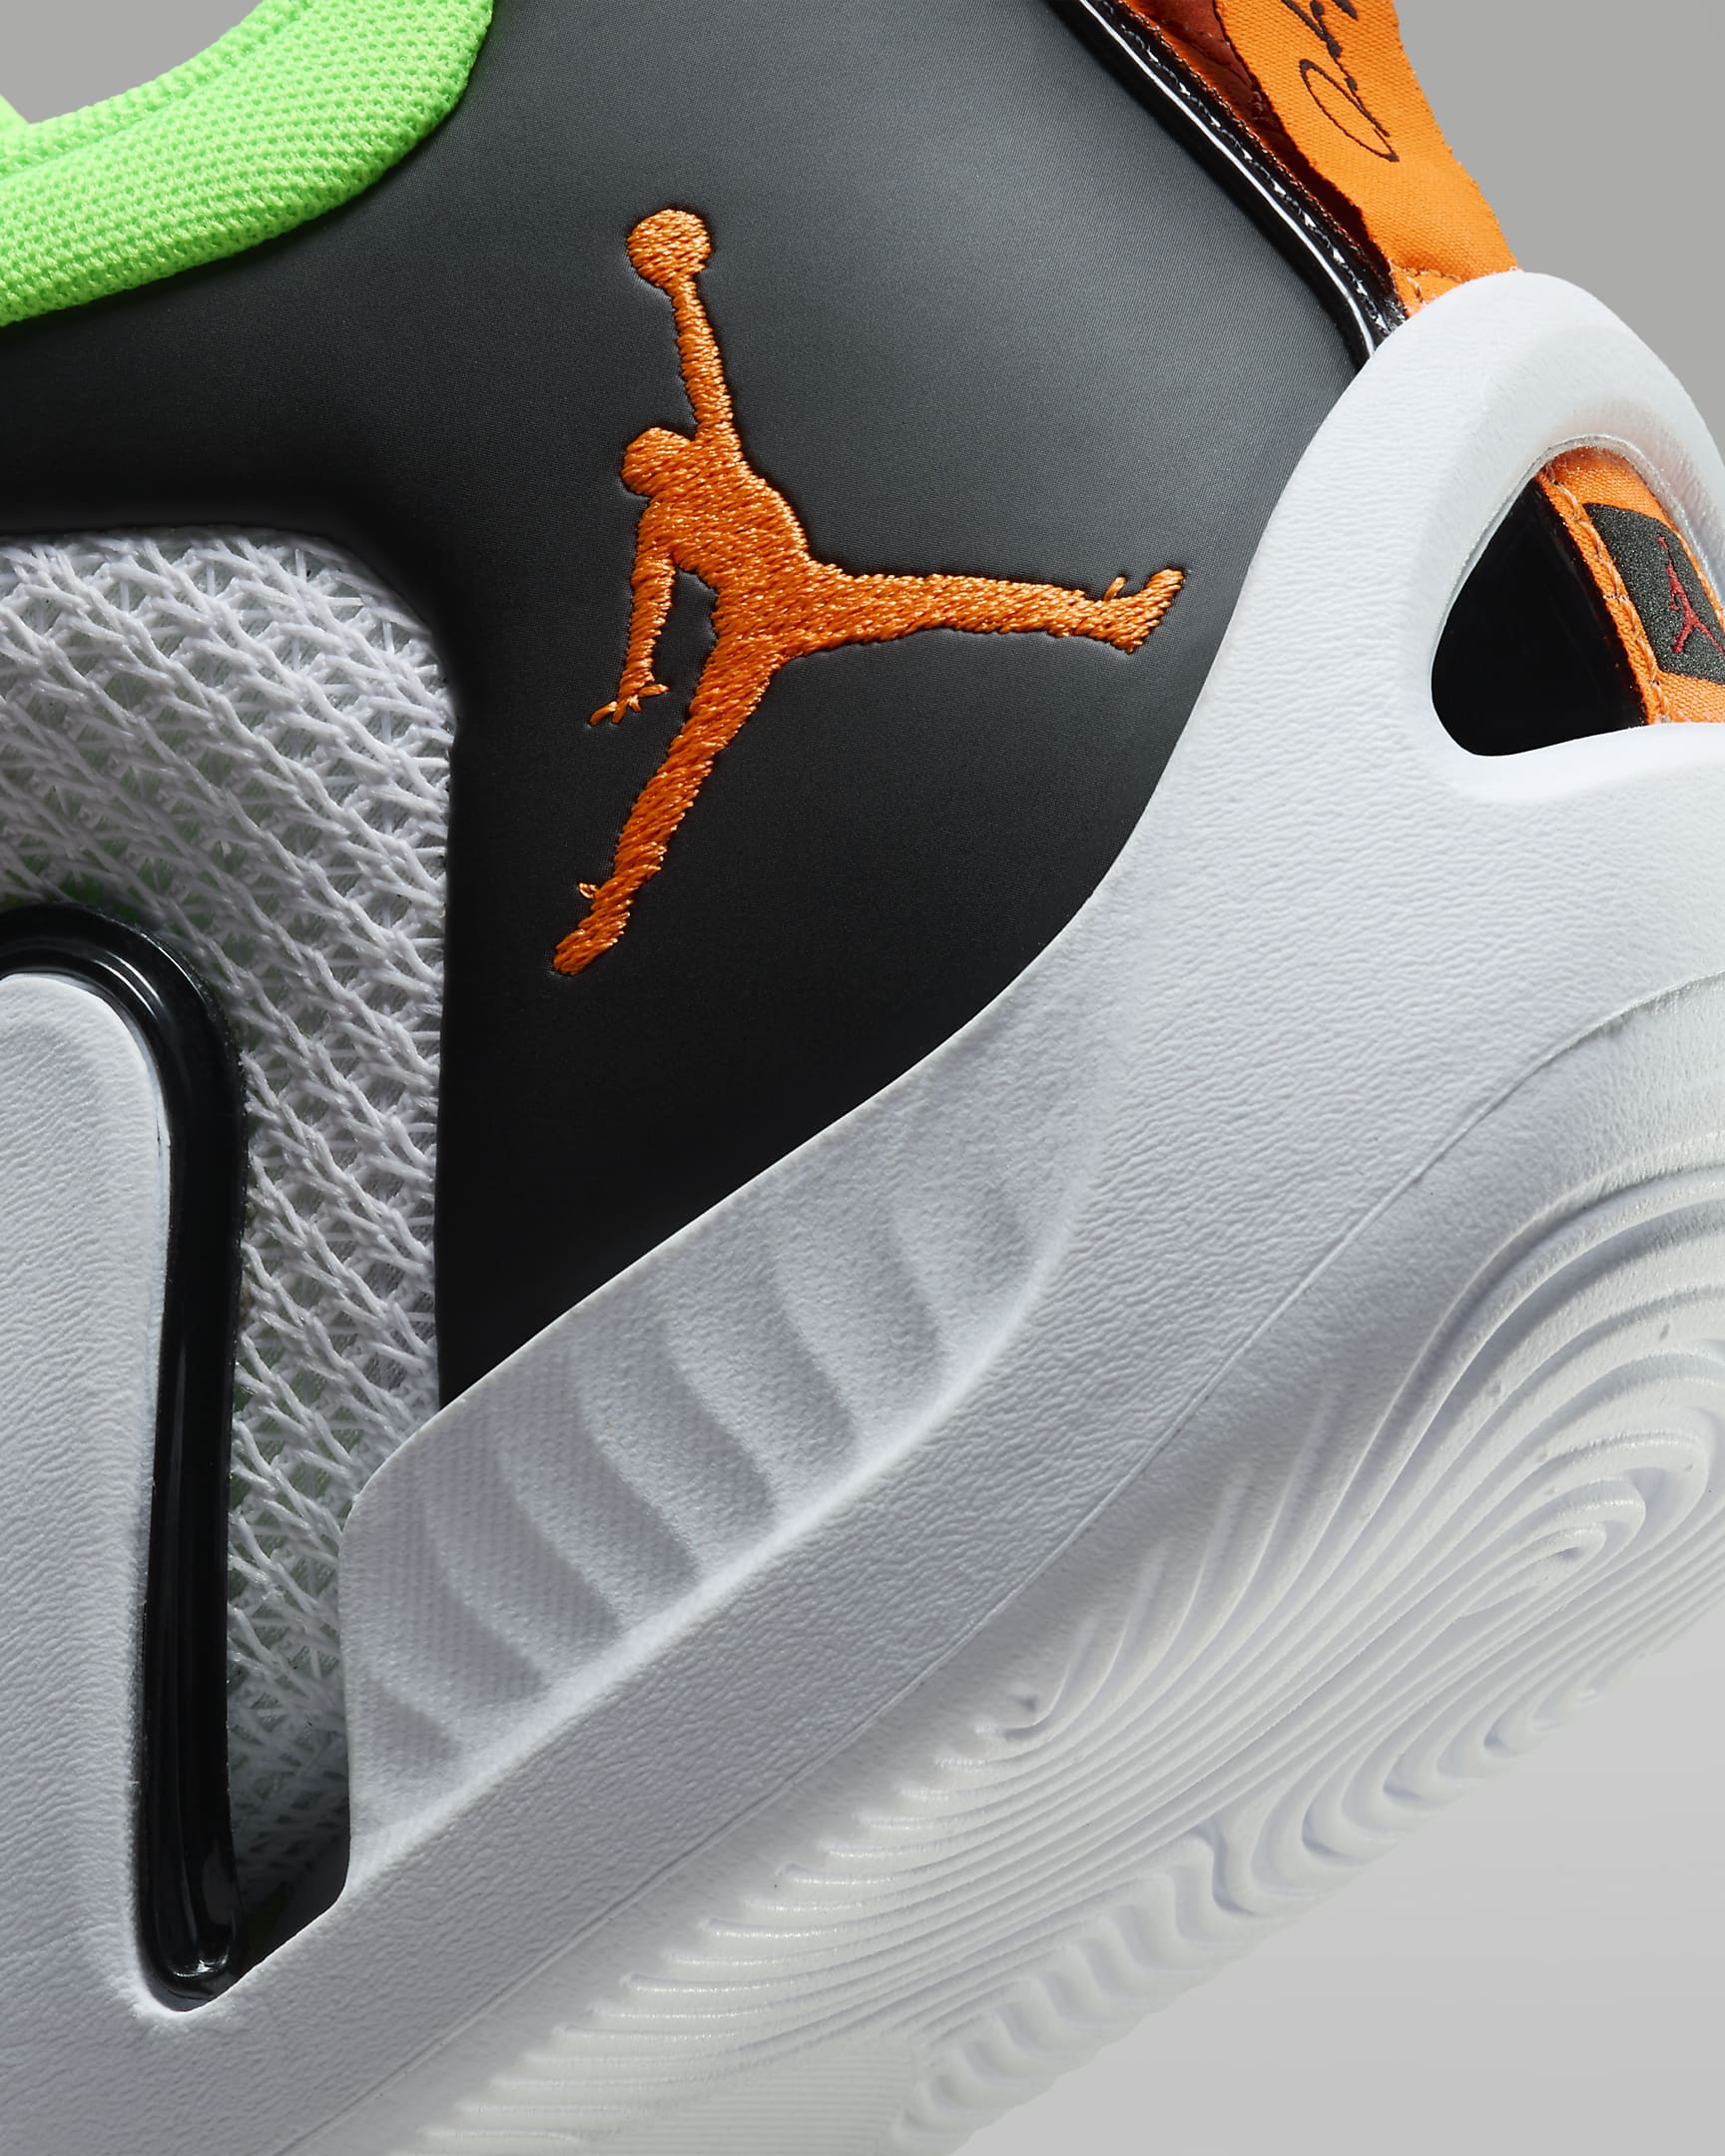 Tatum 1 Basketball Shoes. Nike.com